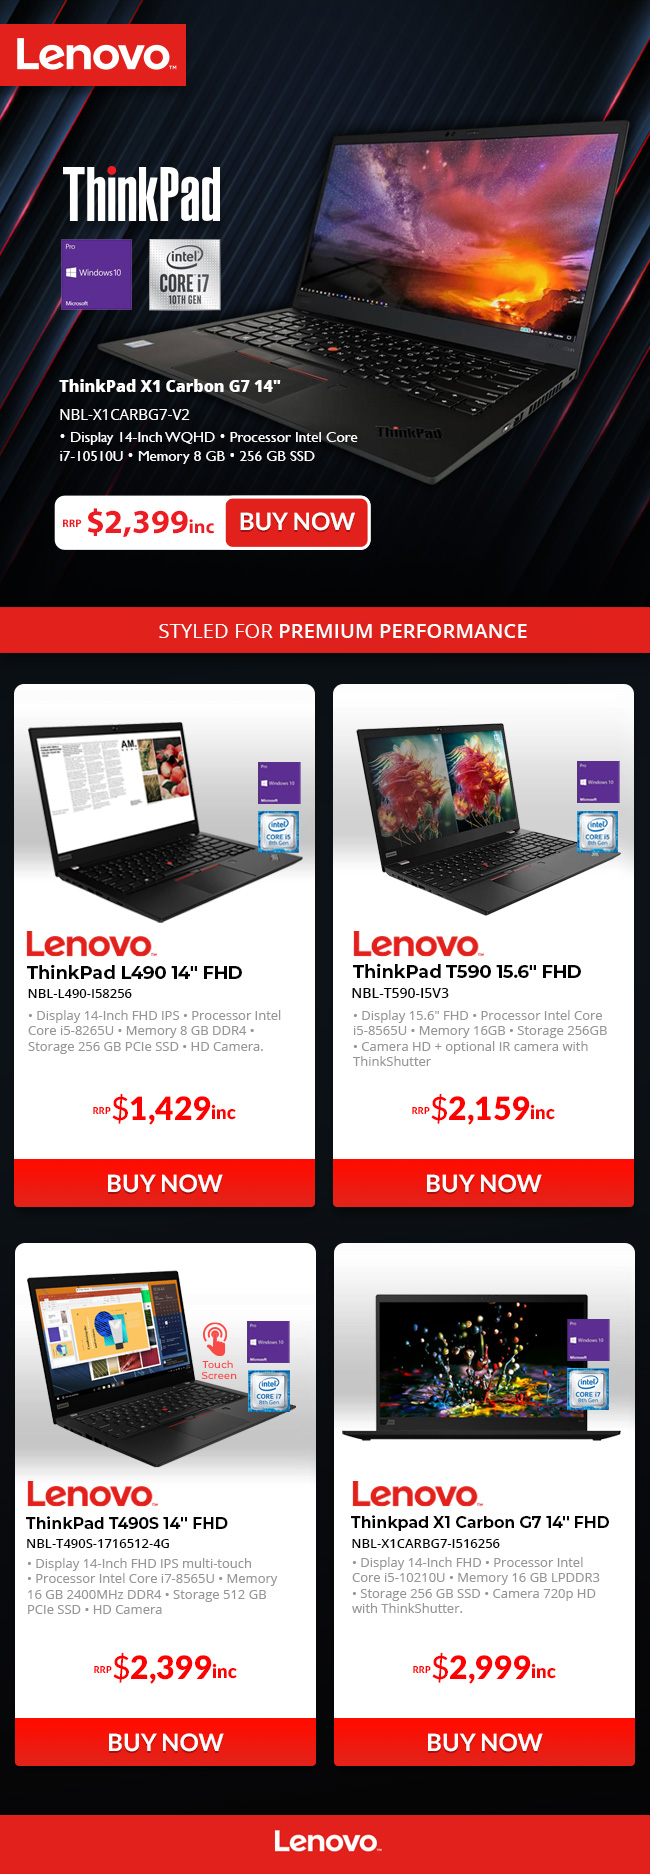 Lenovo September Deals